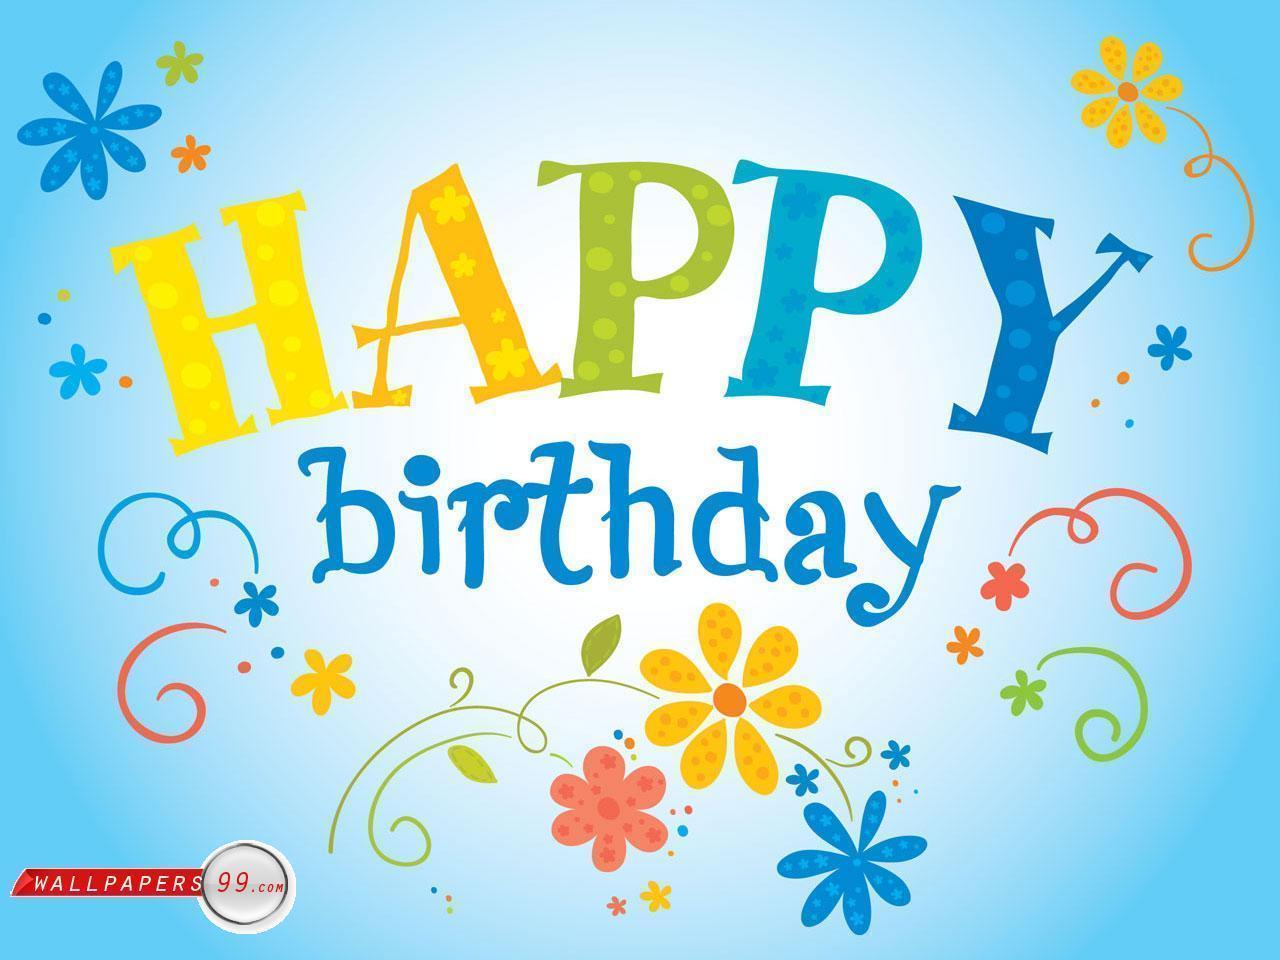 Happy Birthday Wallpaper Picture Image 1280x960 35668